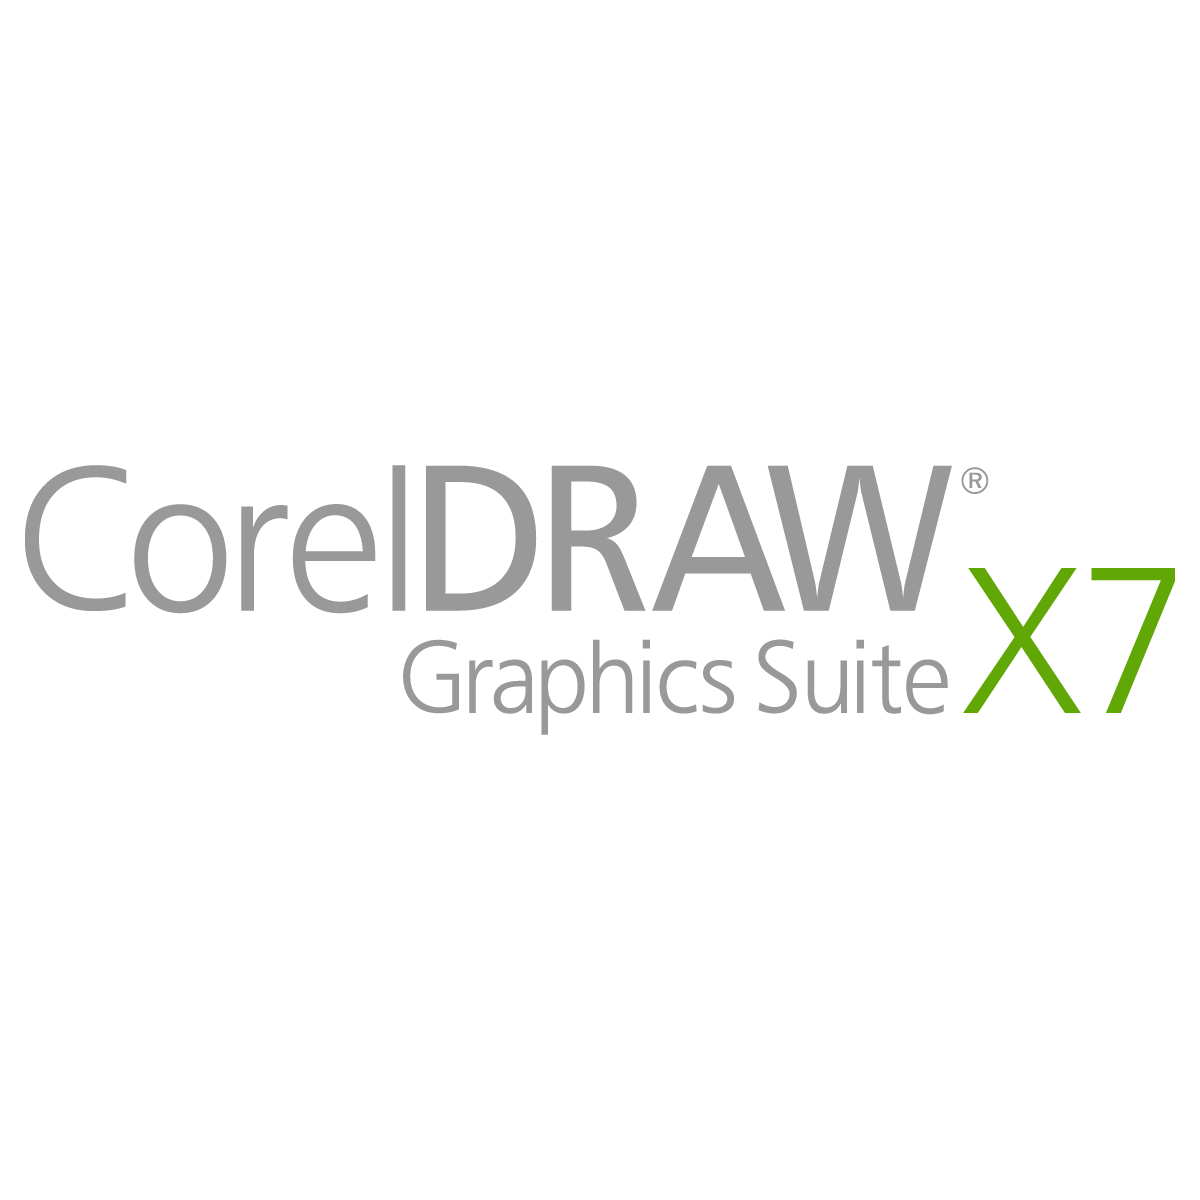 X7 Logo - Corel Draw X7 Logo Vector | Free Vector Silhouette Graphics AI EPS ...